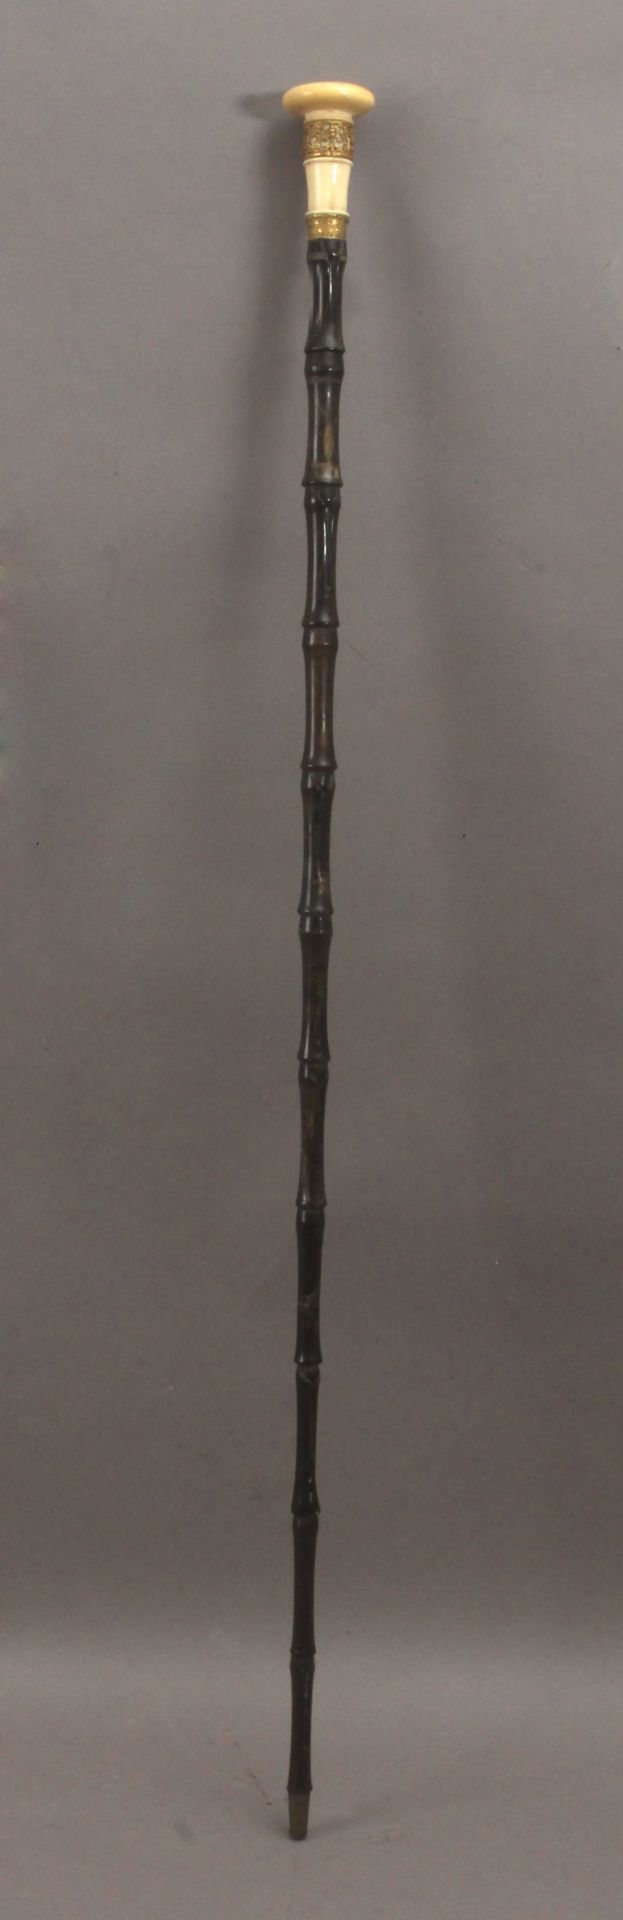 A walking cane circa 1900 - Image 6 of 8